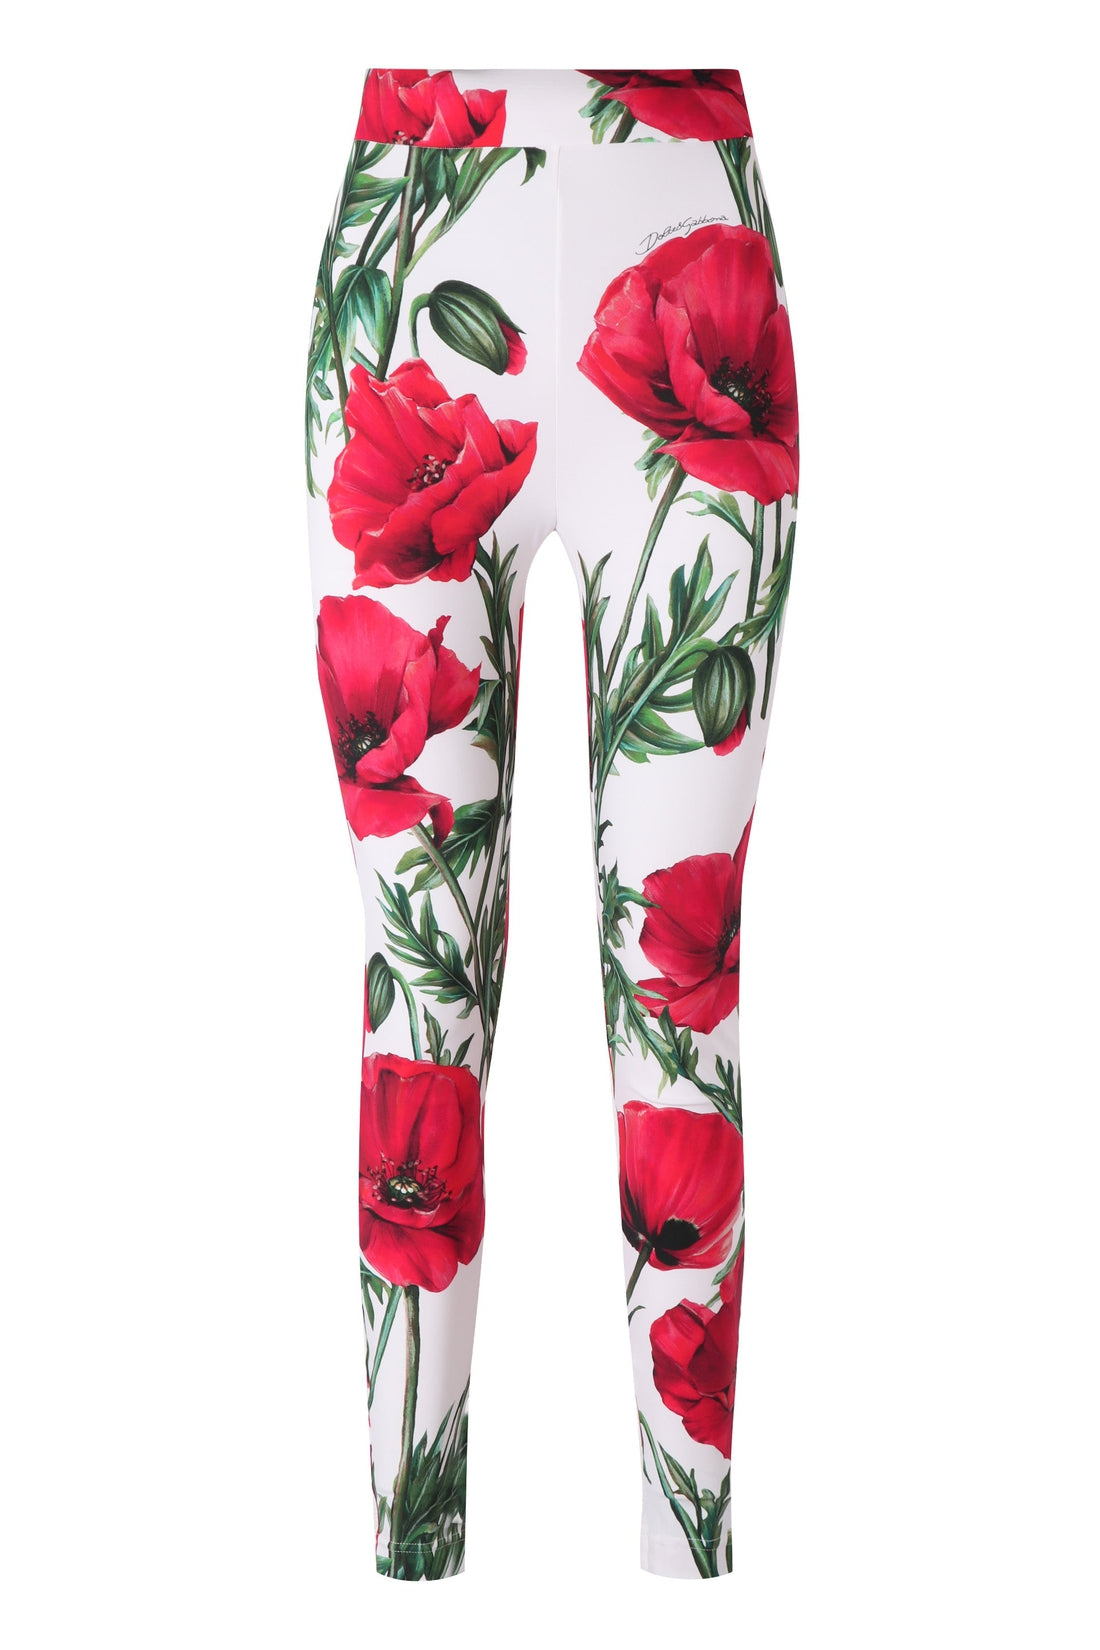 Dolce & Gabbana-OUTLET-SALE-Flower print leggings-ARCHIVIST